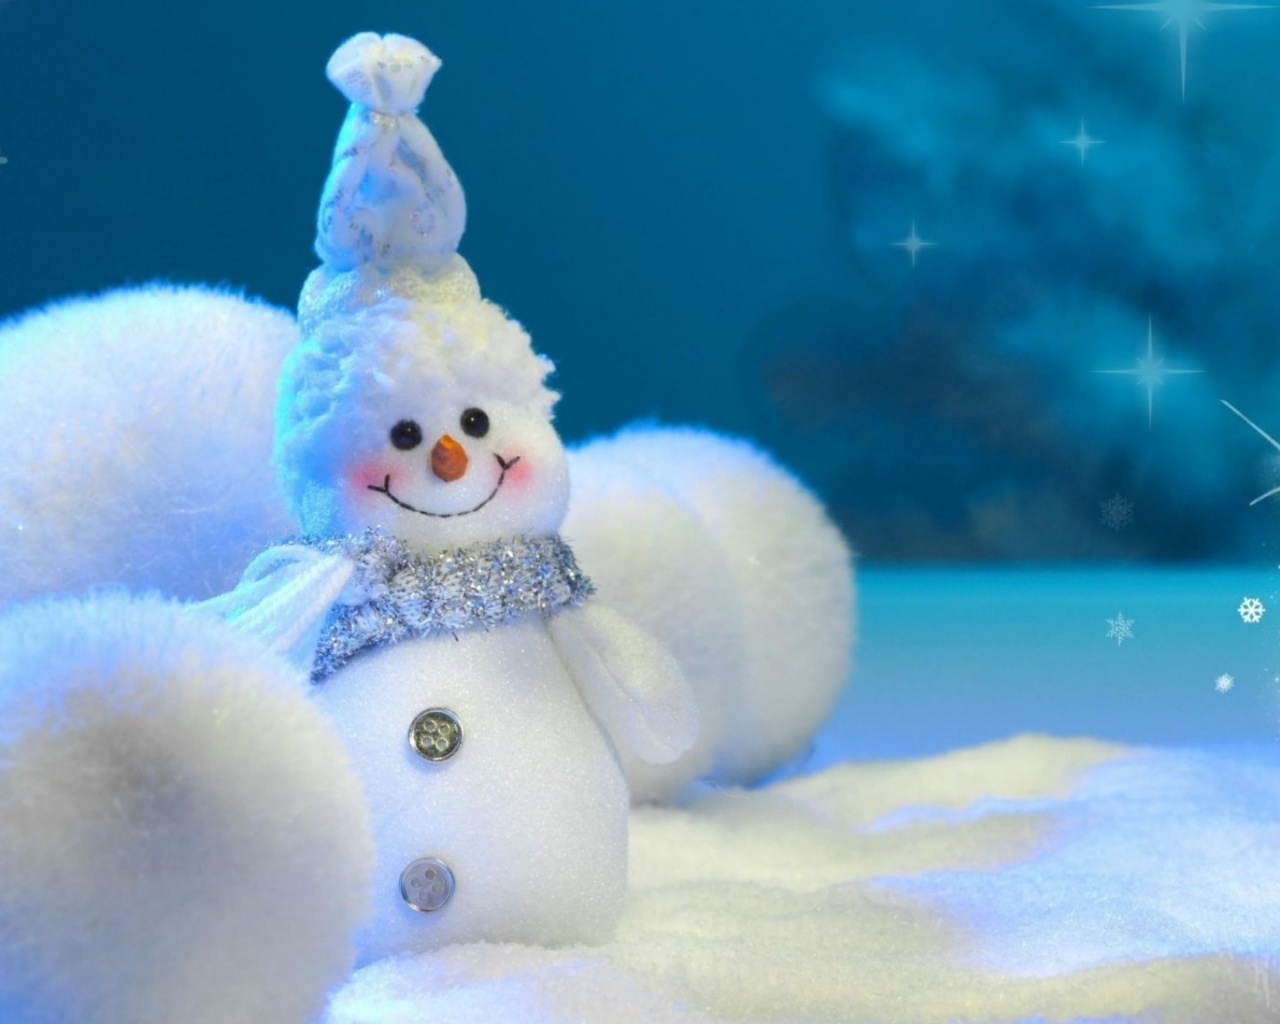 Snowman Balls Snow Snowflakes Winter New Year Christmas